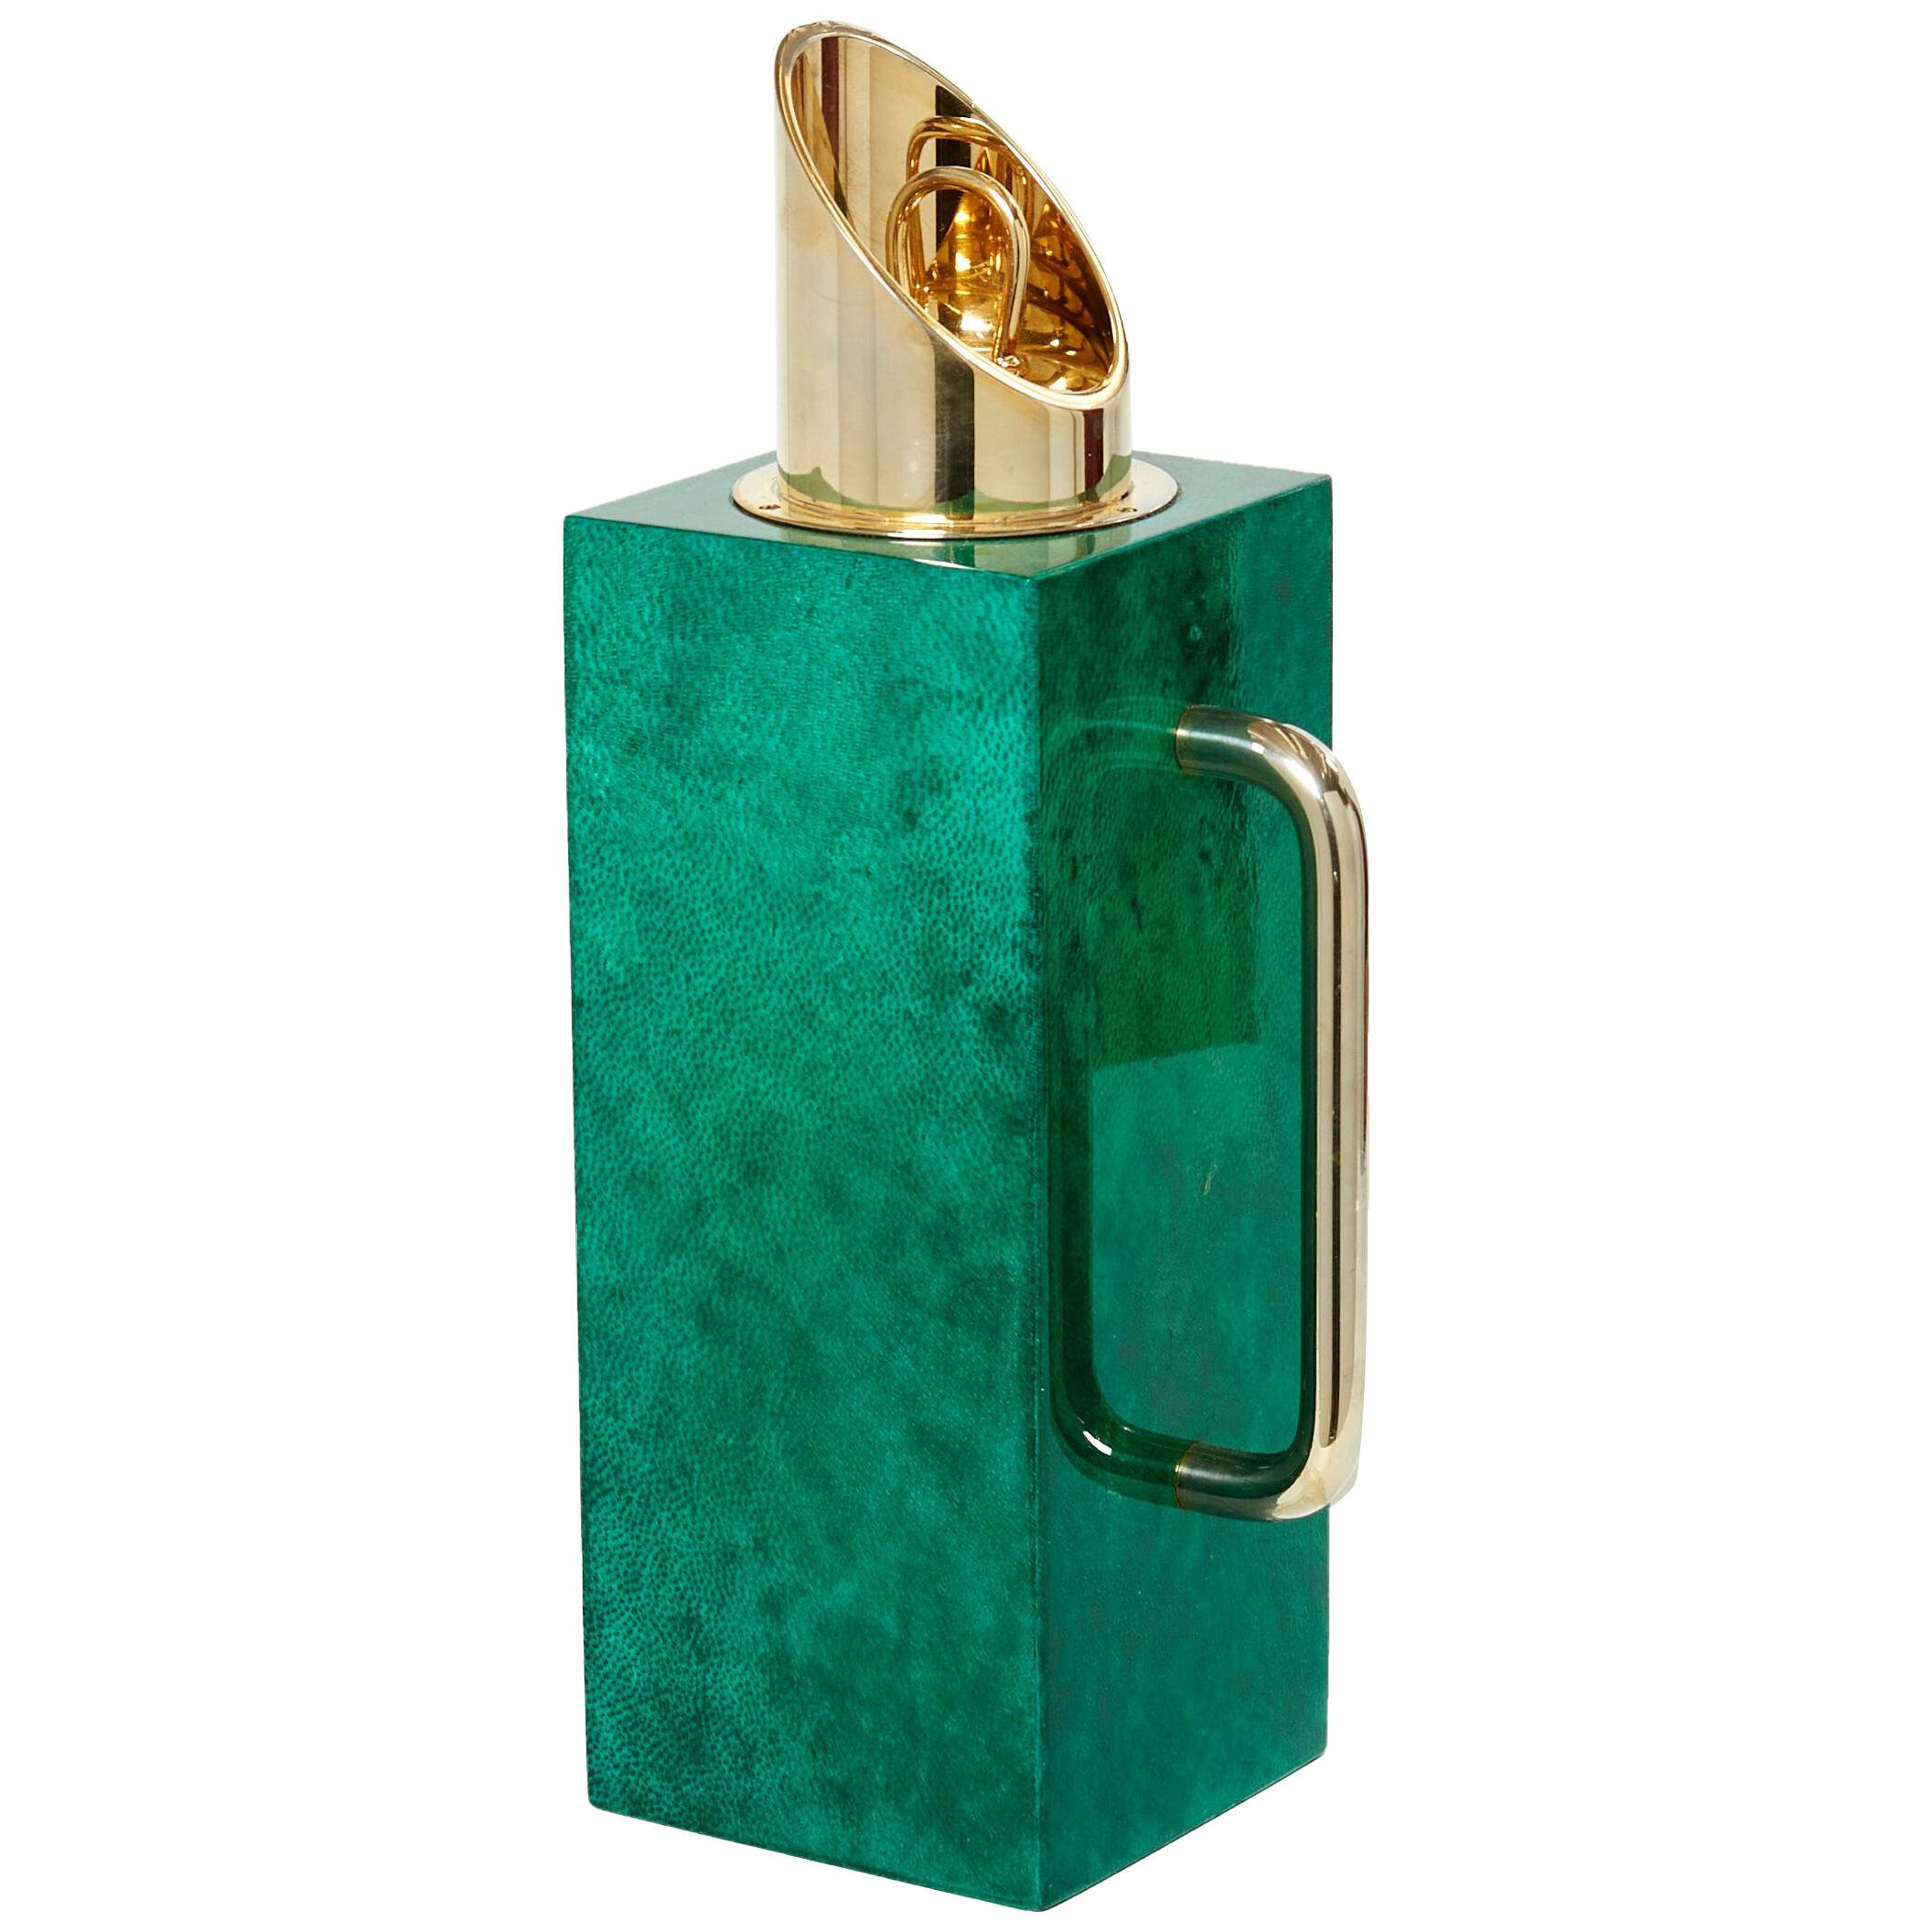 Aldo Tura emerald green goatskin brass thermos carafe 1960